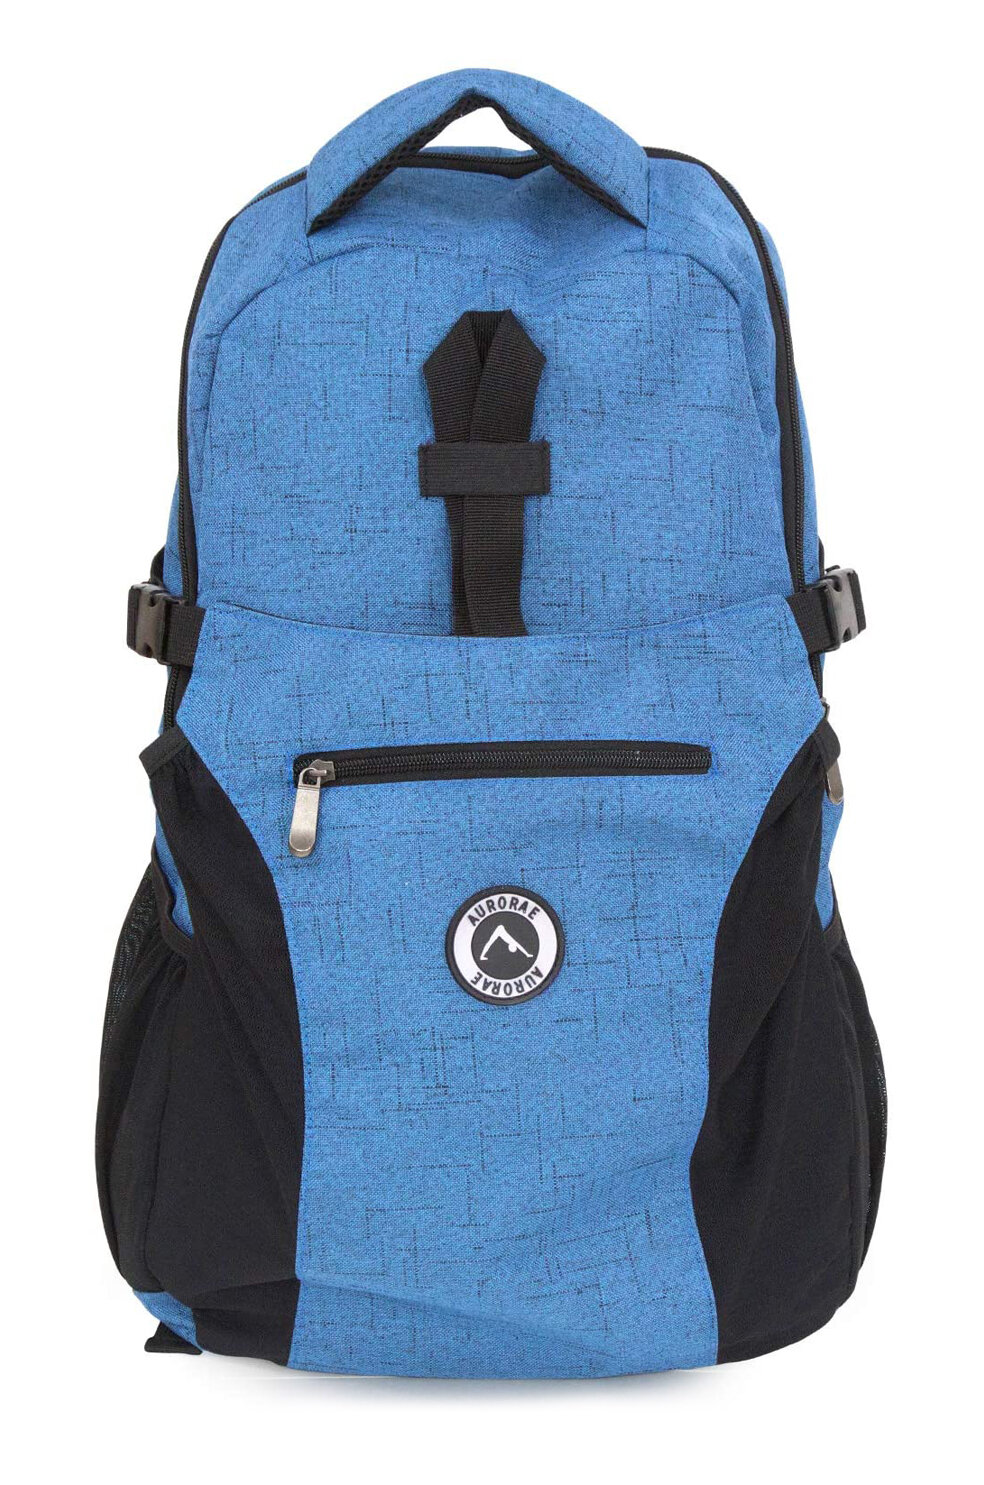 Win This Aurorae Multi-Purpose Yoga Backpack & Synergy Yoga Mat